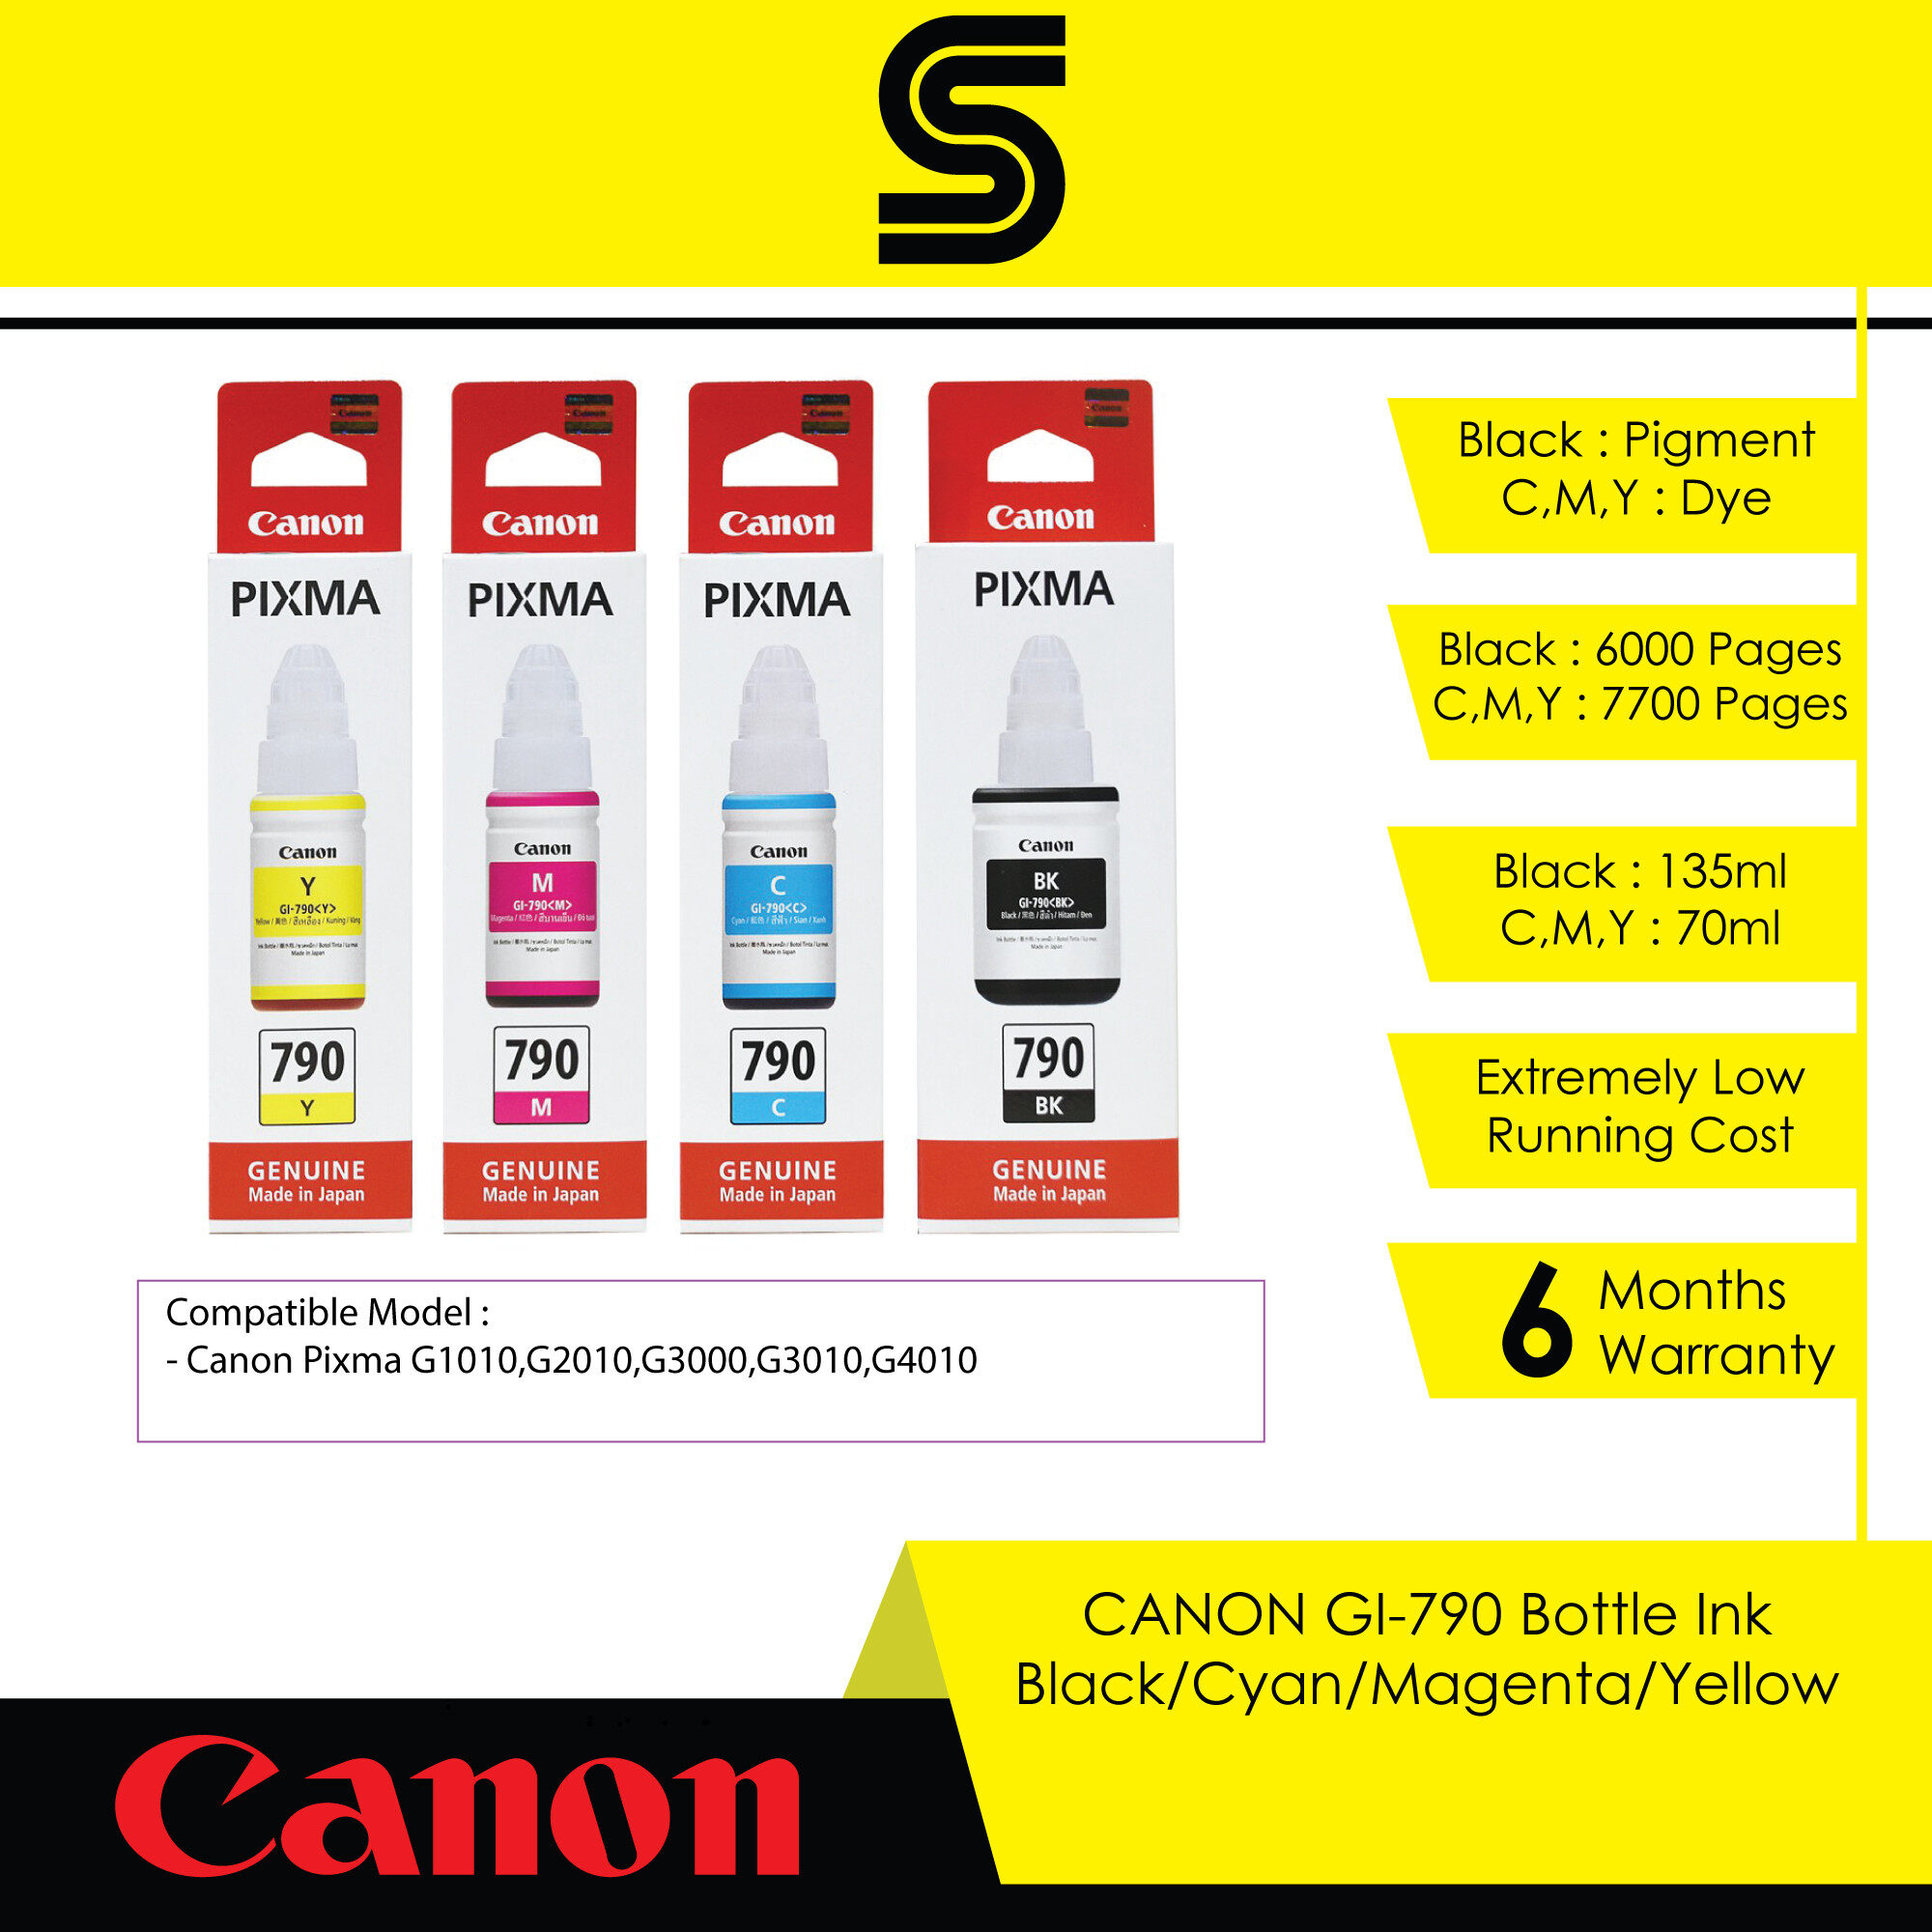 CANON GI-790 Ink Bottle - Black/Cyan/Magenta/Yellow - G1010,G2010,G3000,G3010,G4010